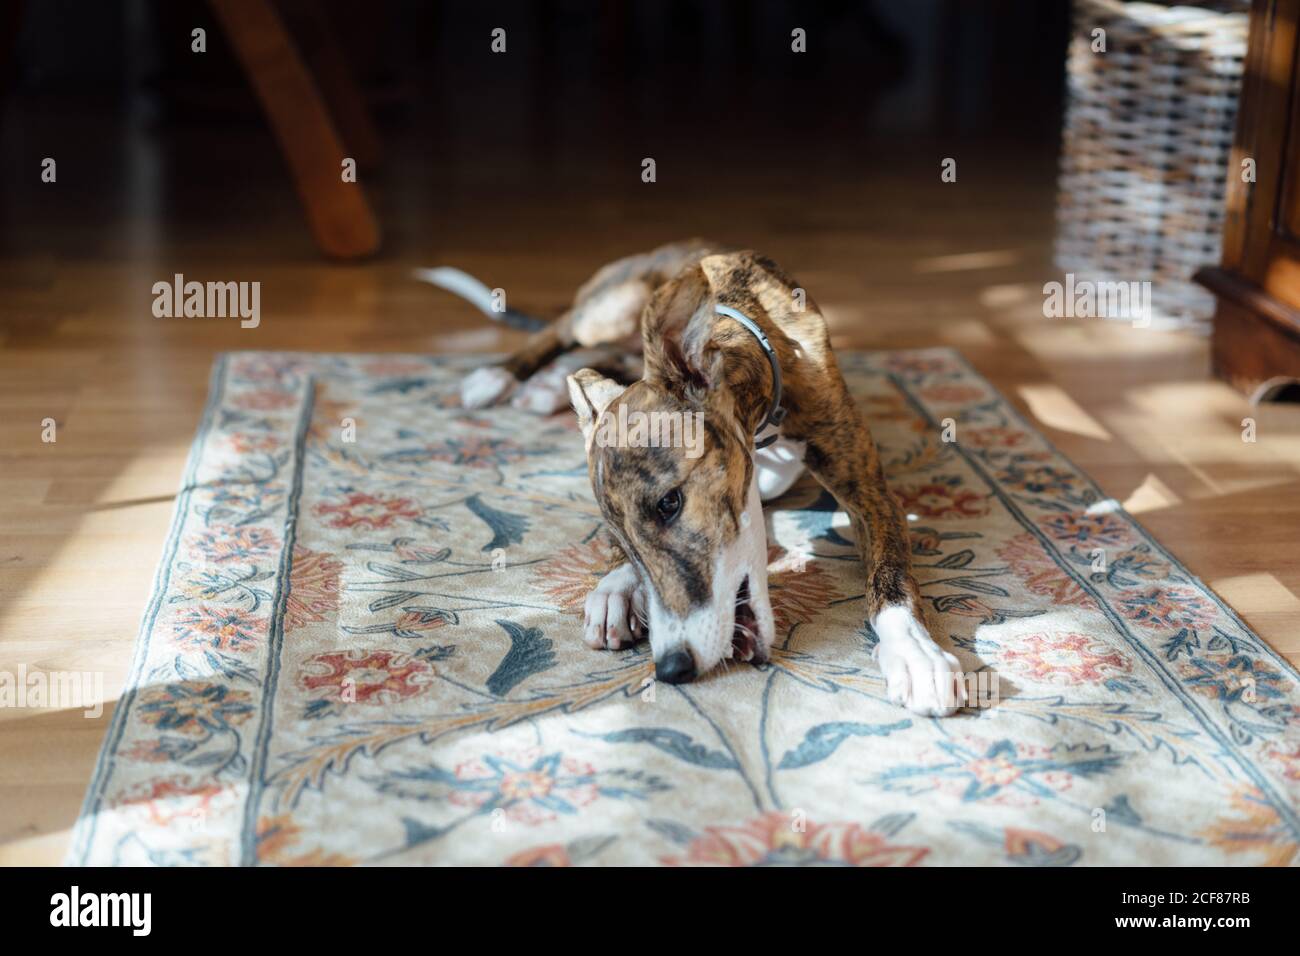 Spanish sighthound dog on carpet at home Stock Photo